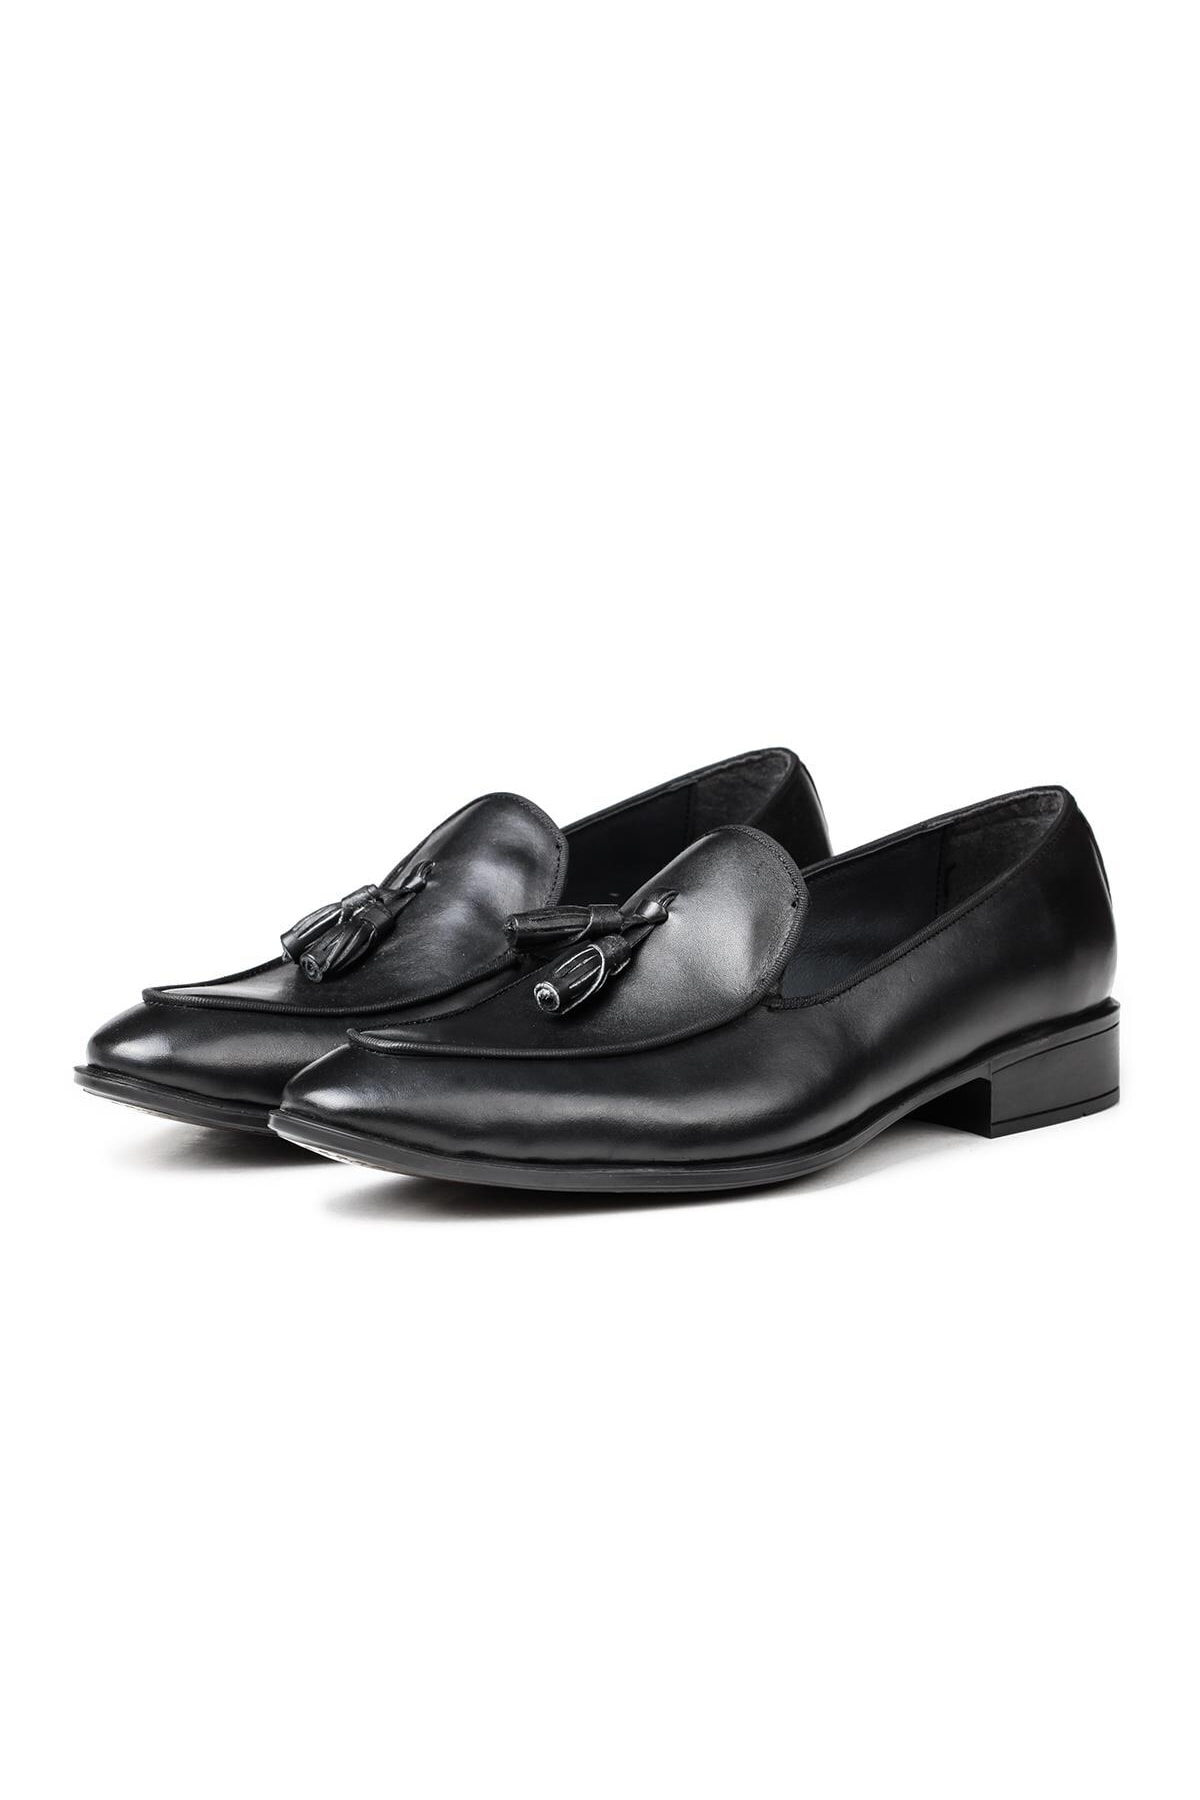 Levně Ducavelli Smug Genuine Leather Men's Classic Shoes, Loafers Classic Shoes, Loafers.